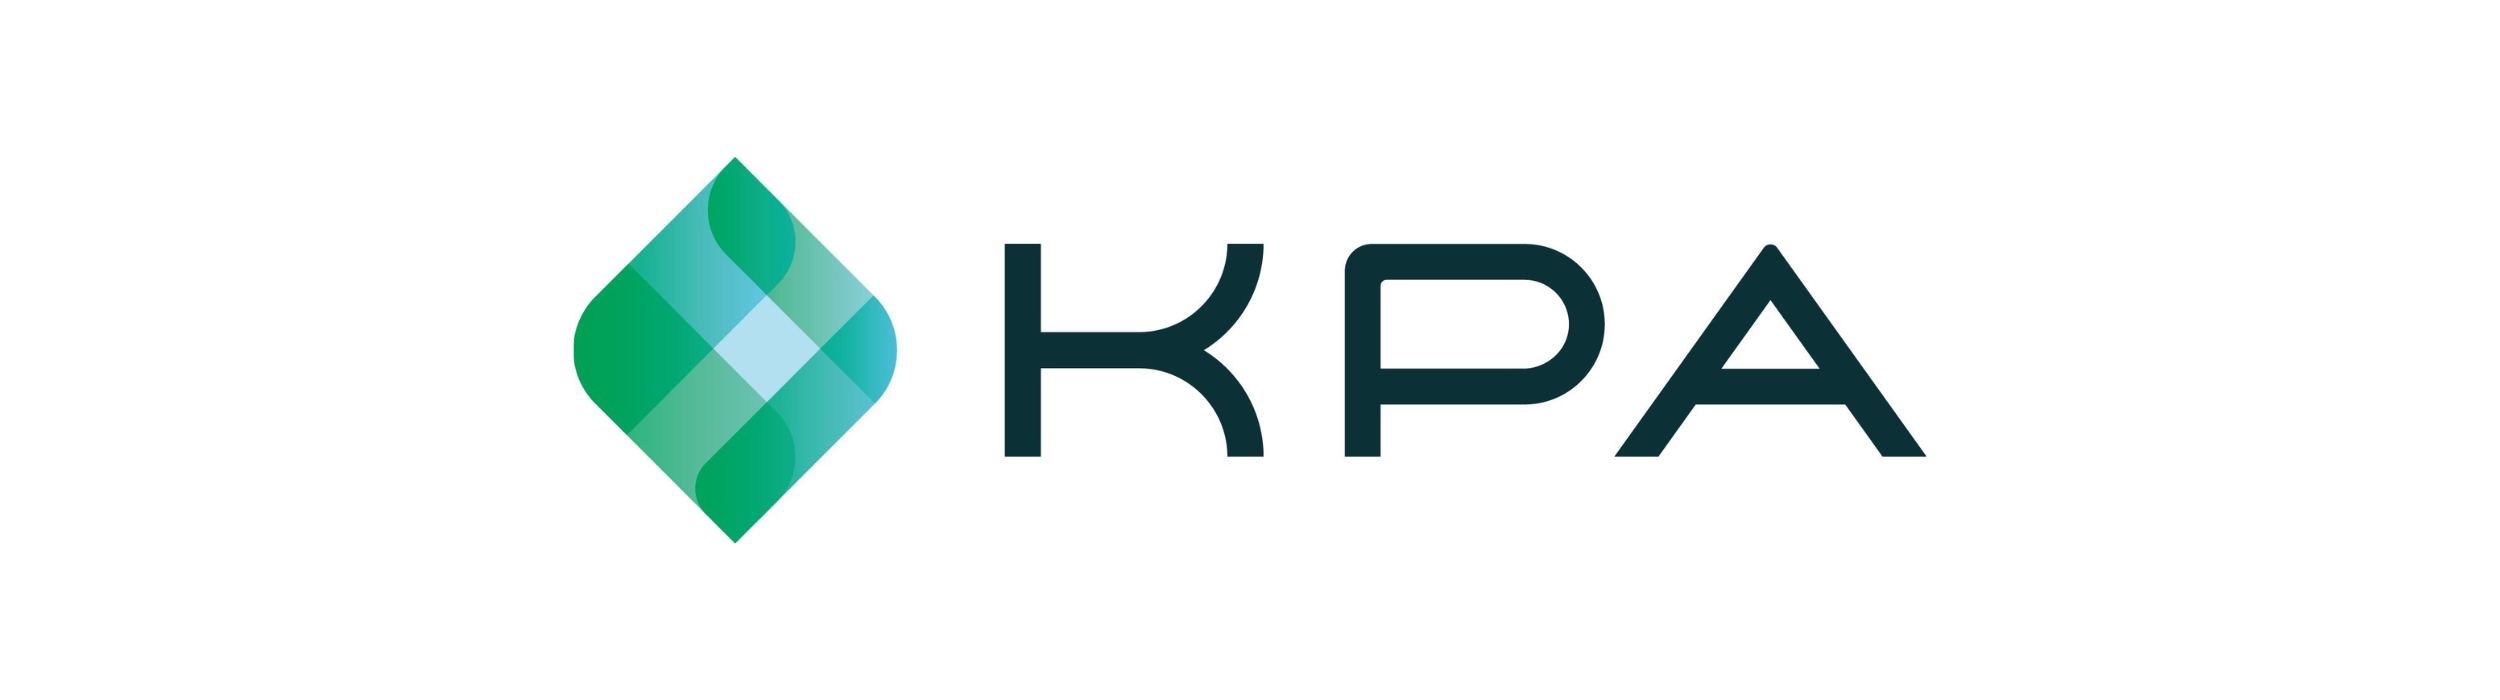 KPA Logo (case study).png